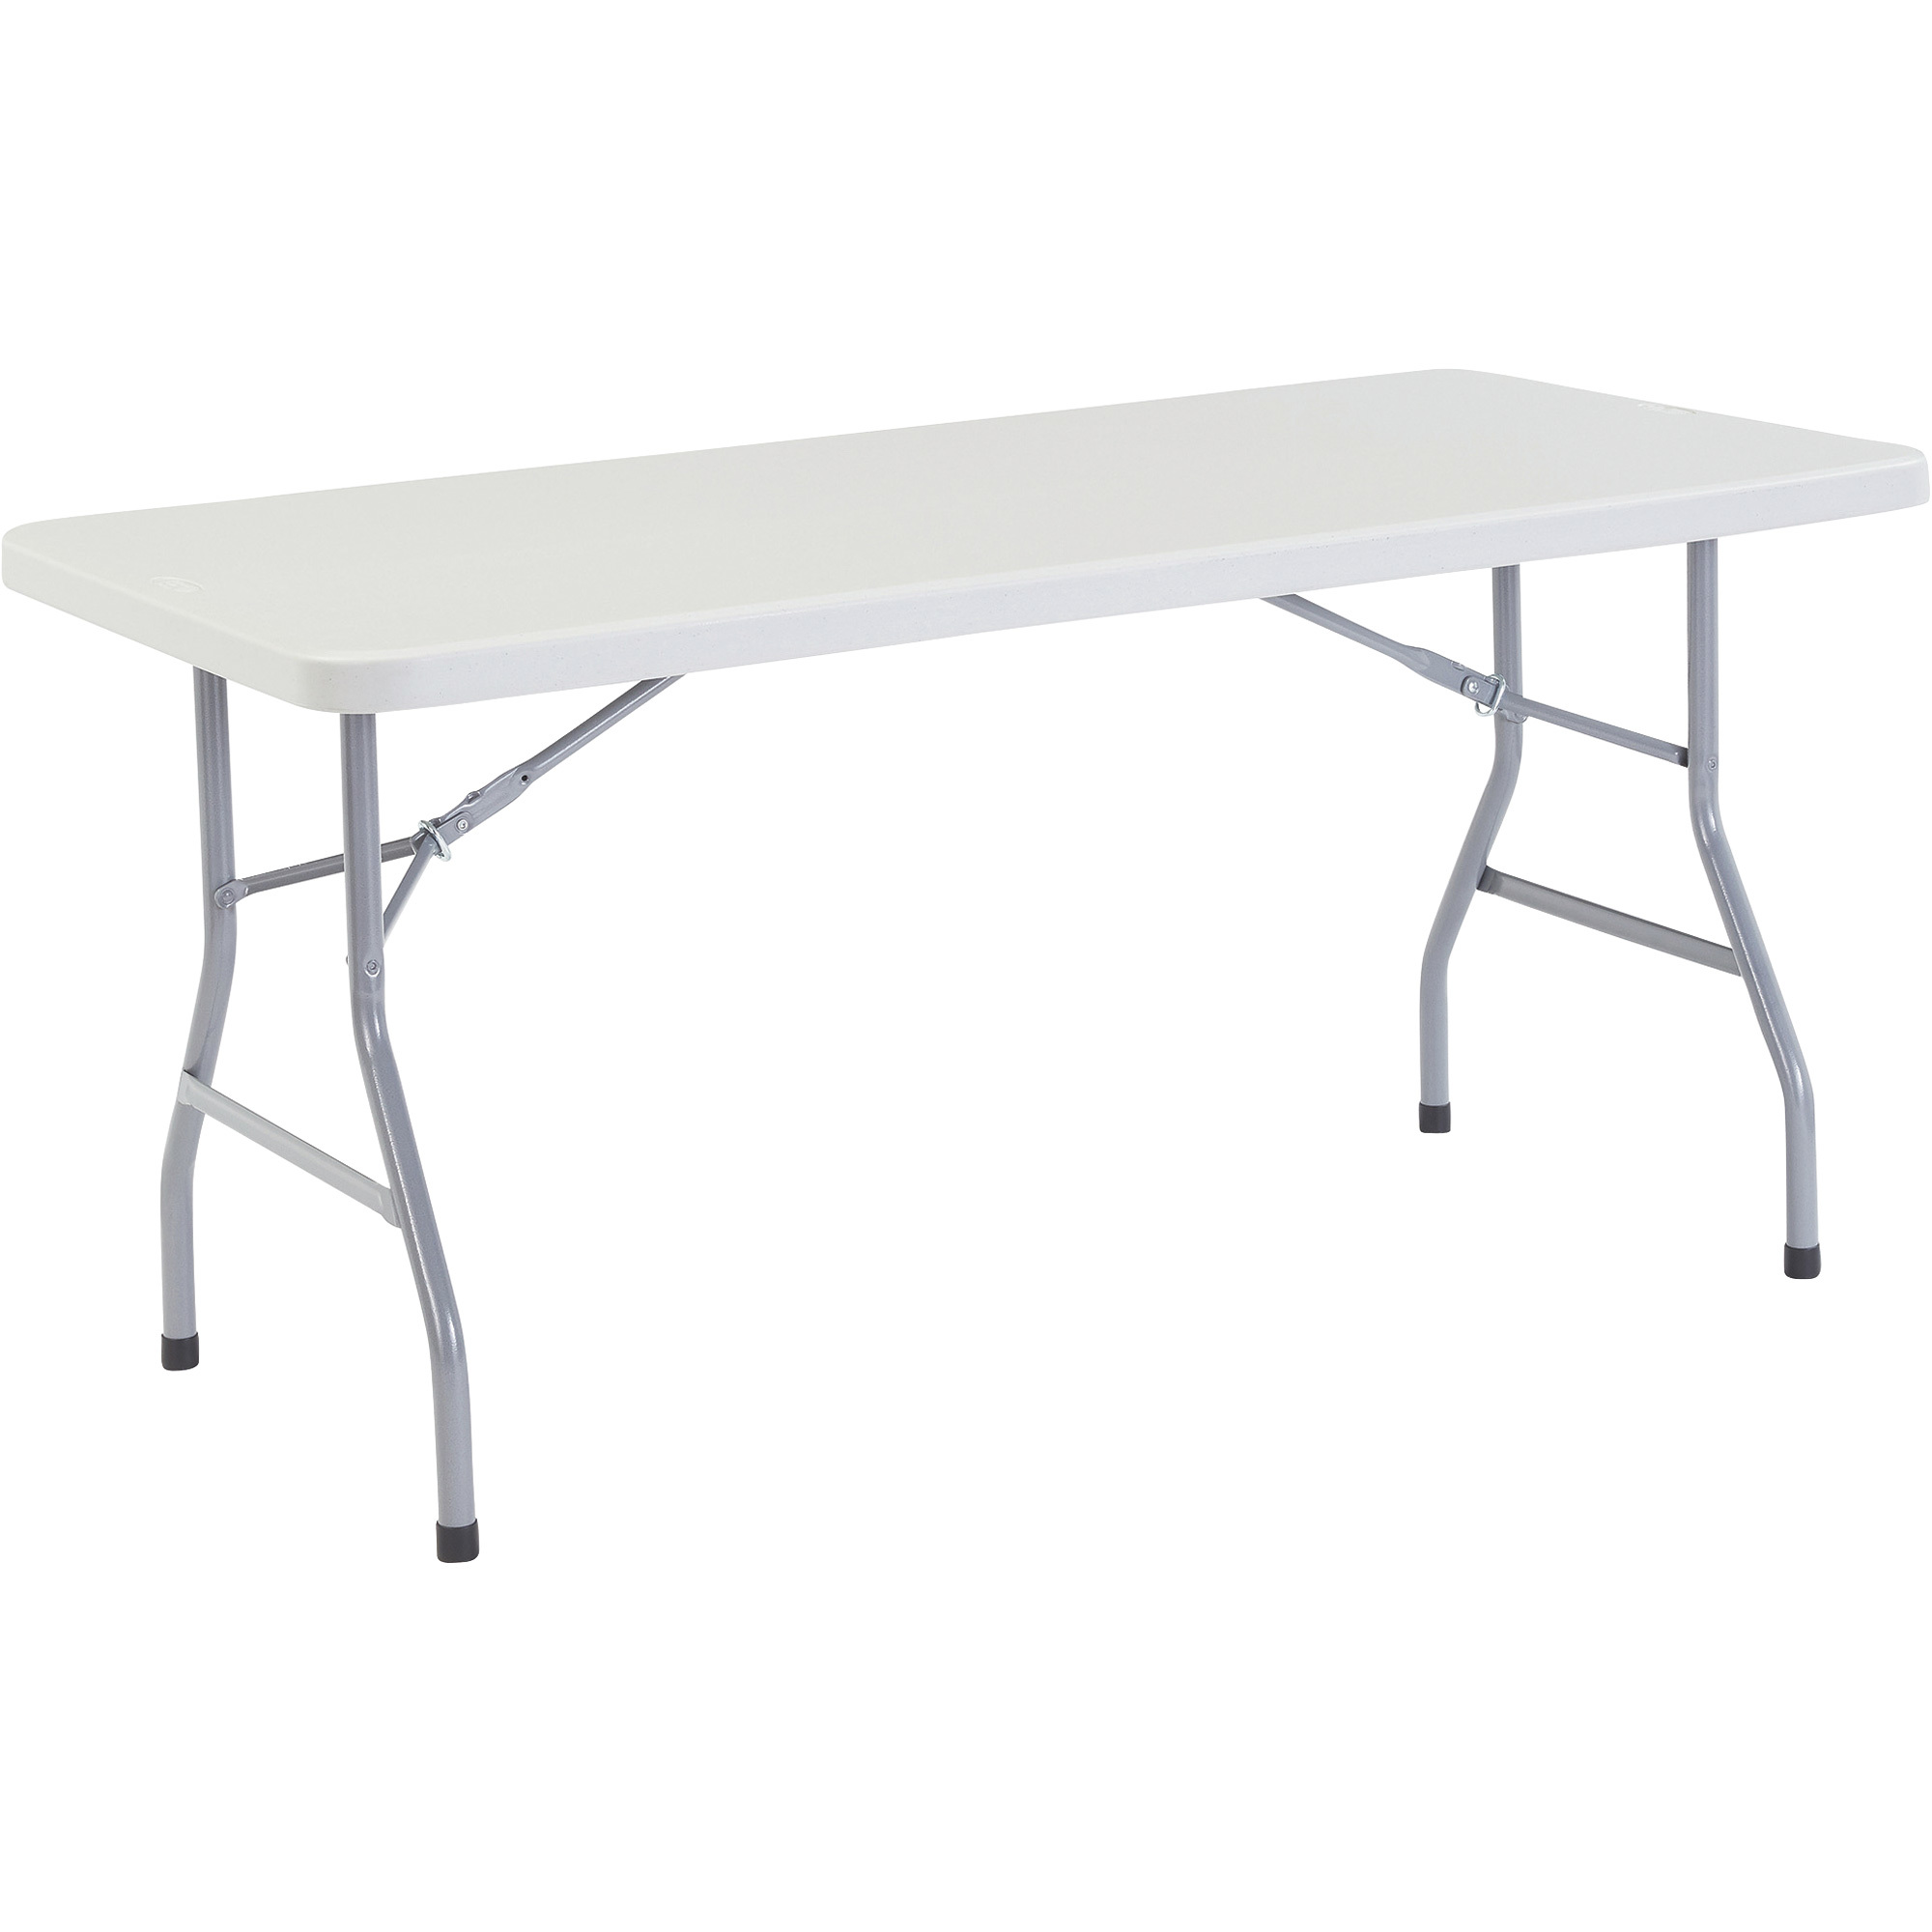 Plastic Folding Table — 30Inch W x 60Inch L, Model - National Public Seating BT3060